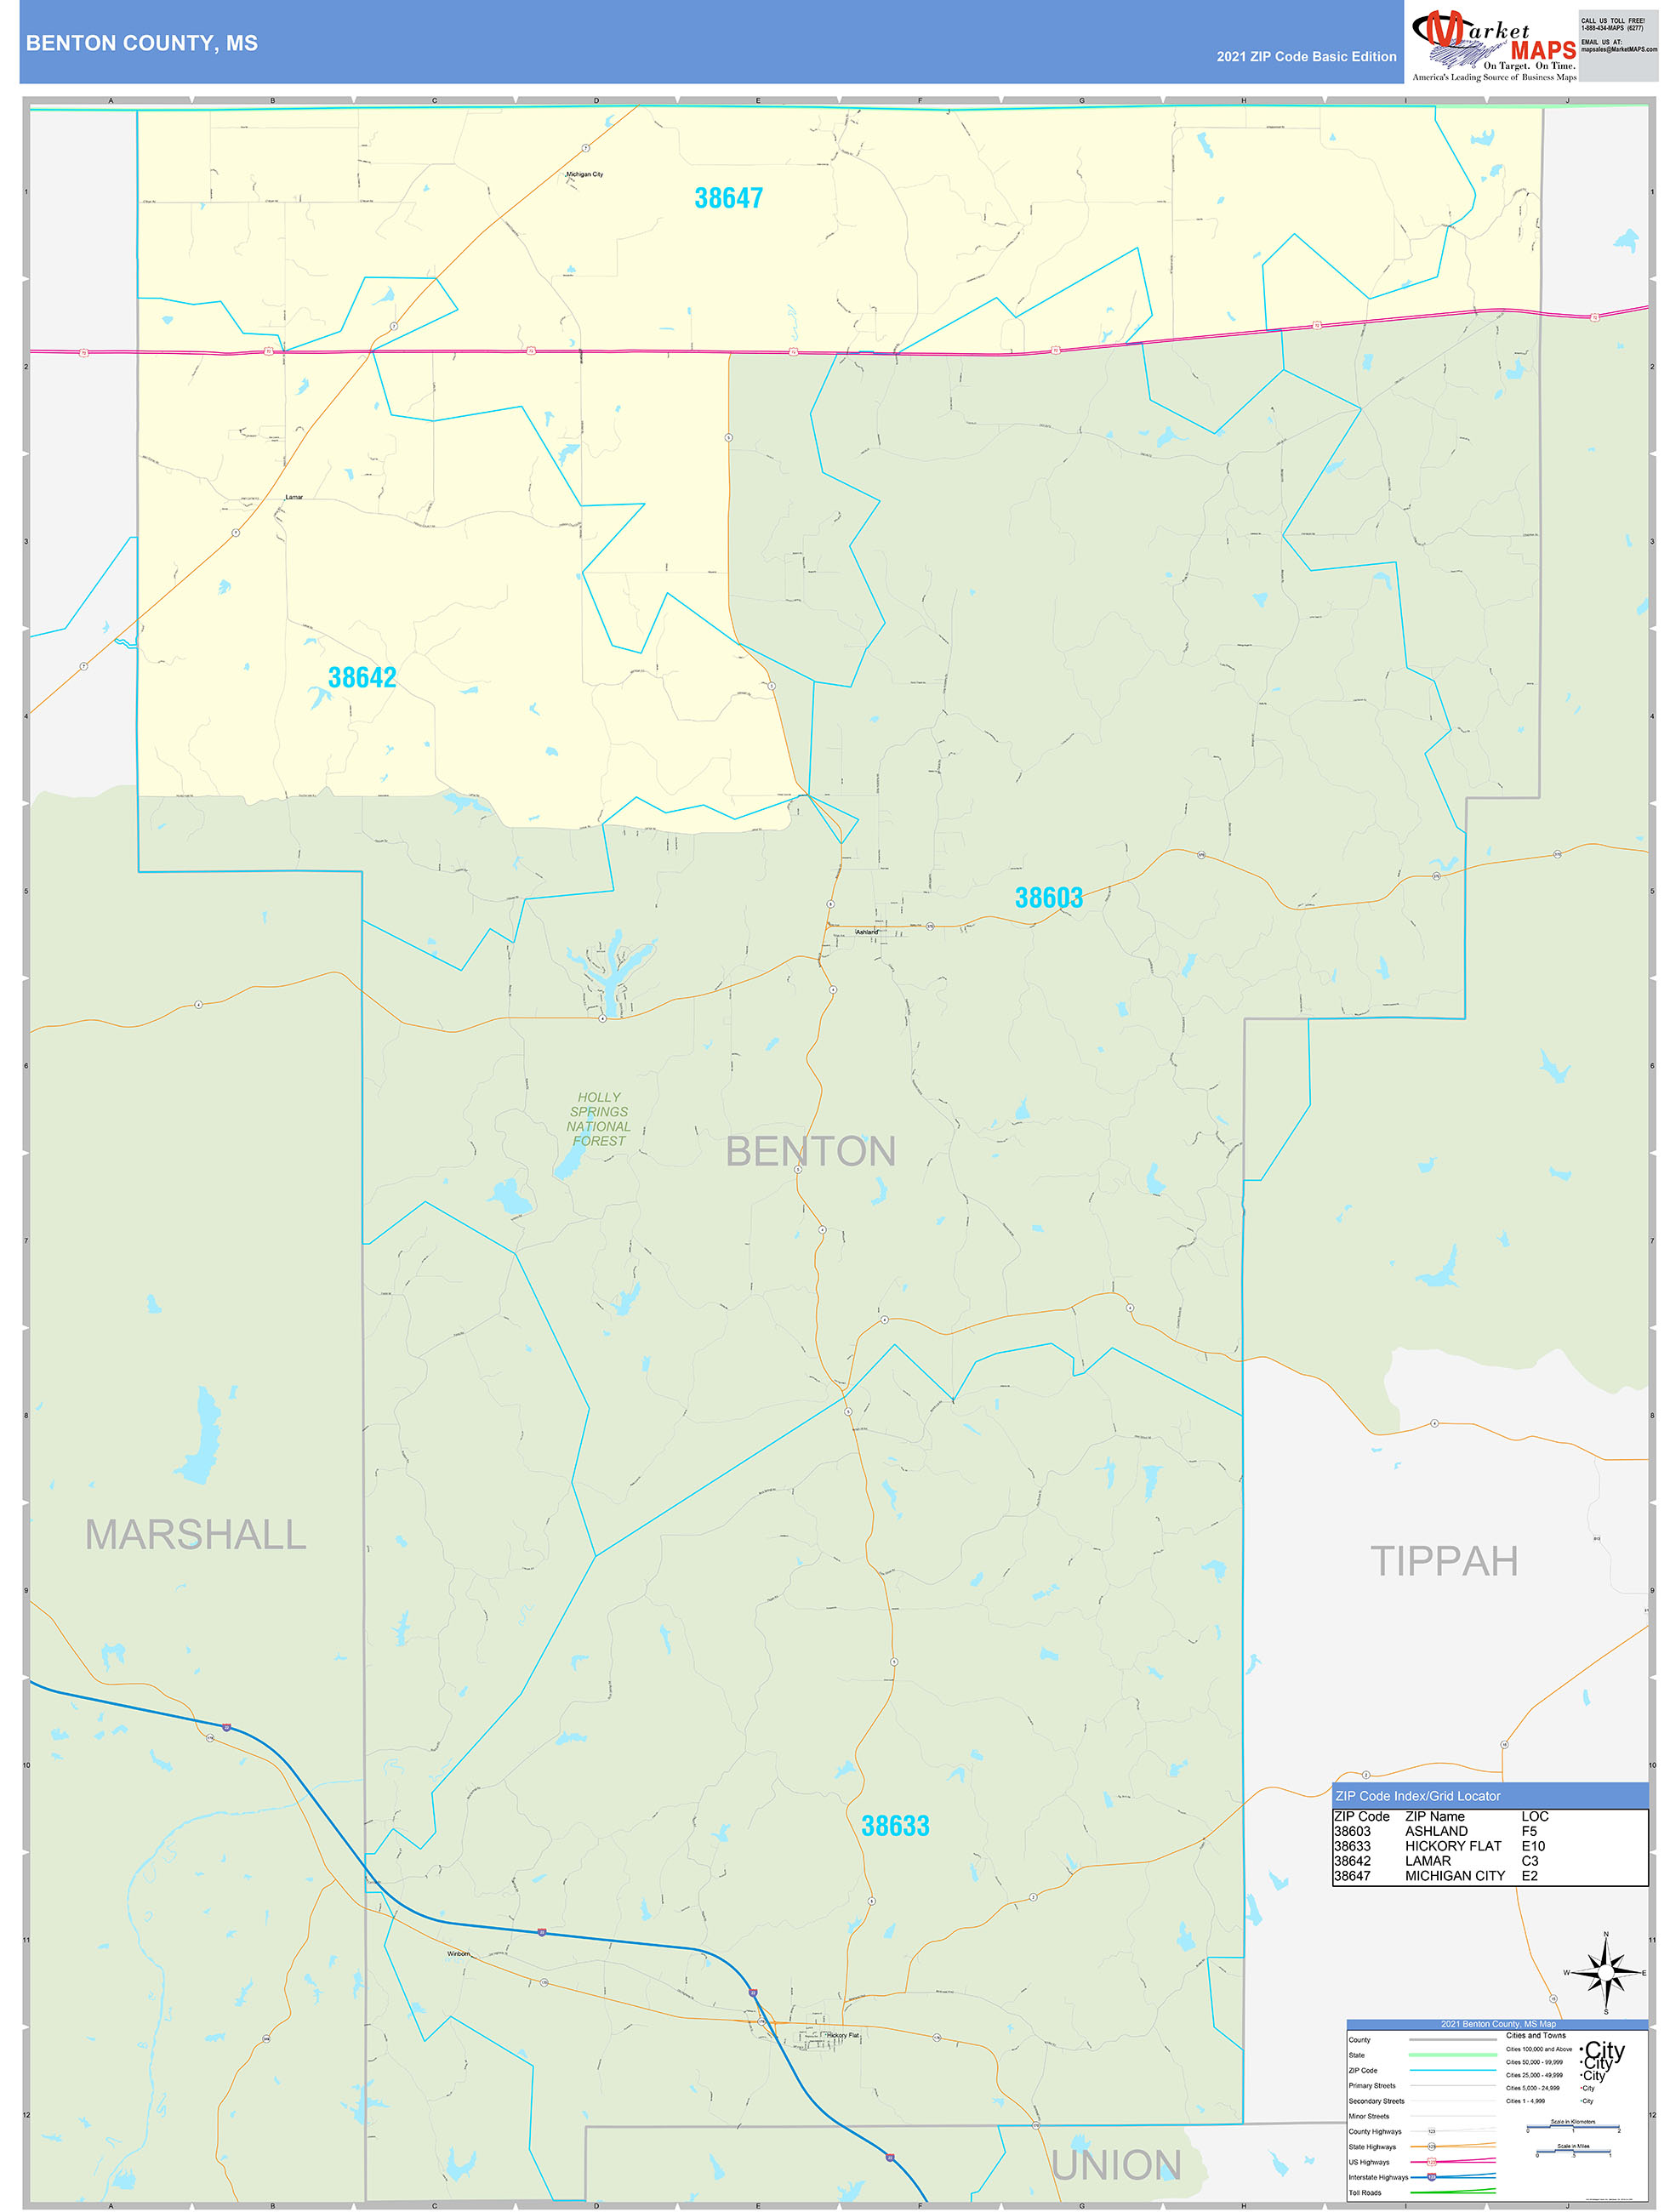 benton-county-ms-zip-code-wall-map-basic-style-by-marketmaps